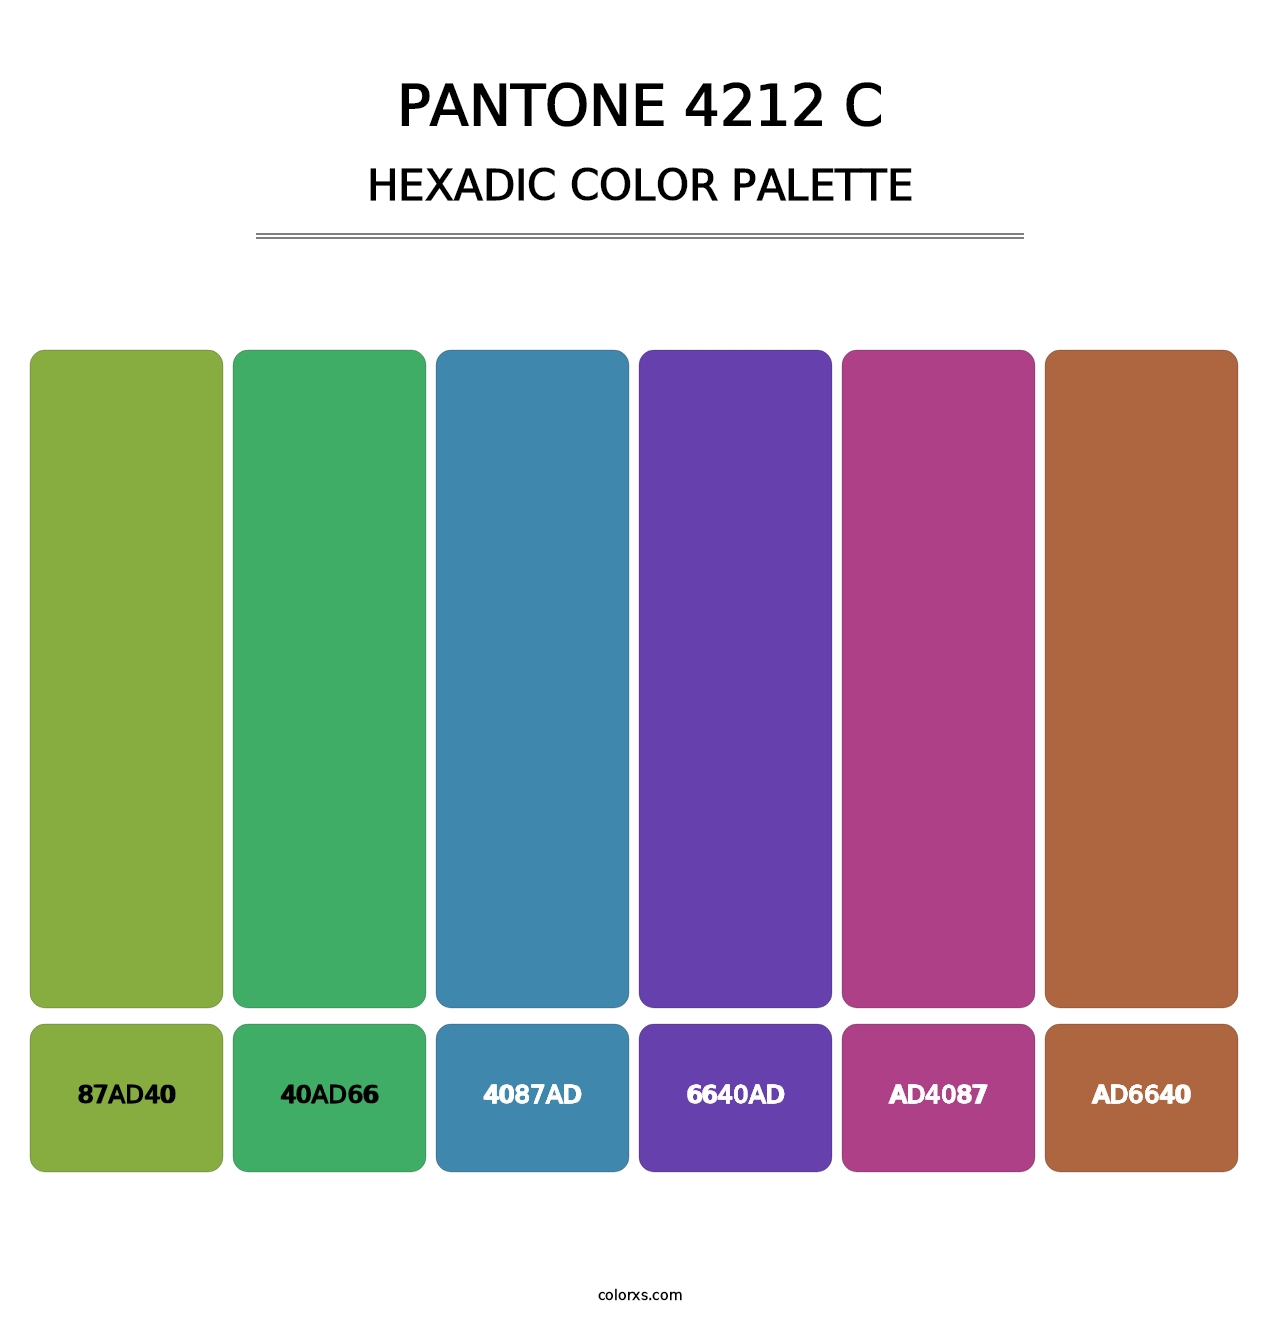 PANTONE 4212 C - Hexadic Color Palette